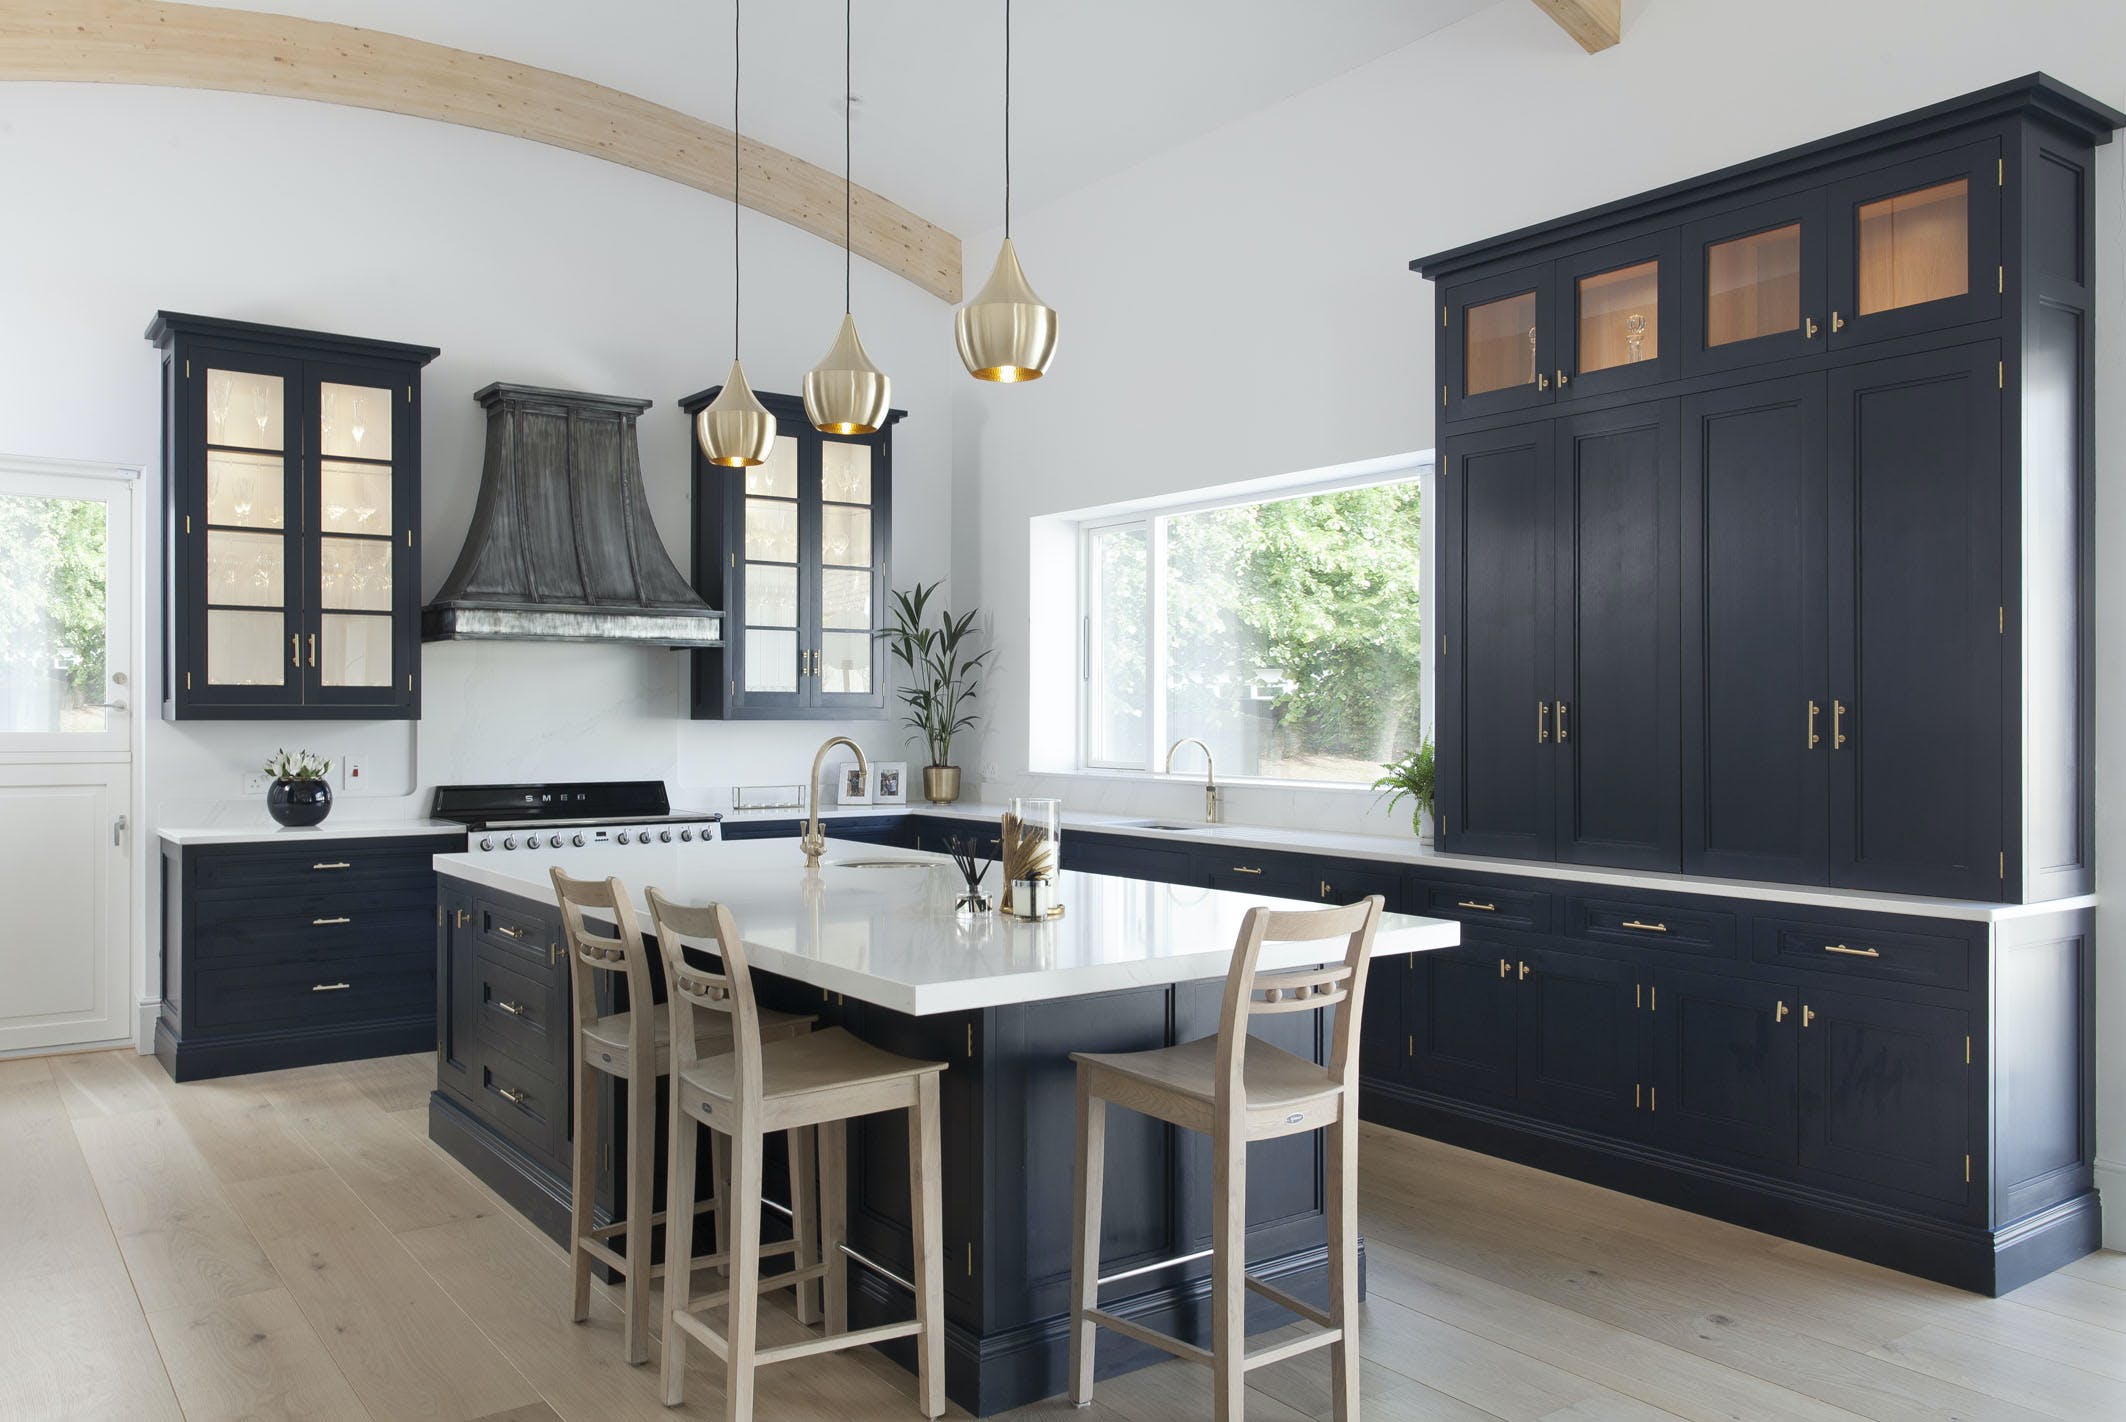 Kitchen by Shalford Interiors featuring White Silestone Calacatta Gold Worktops